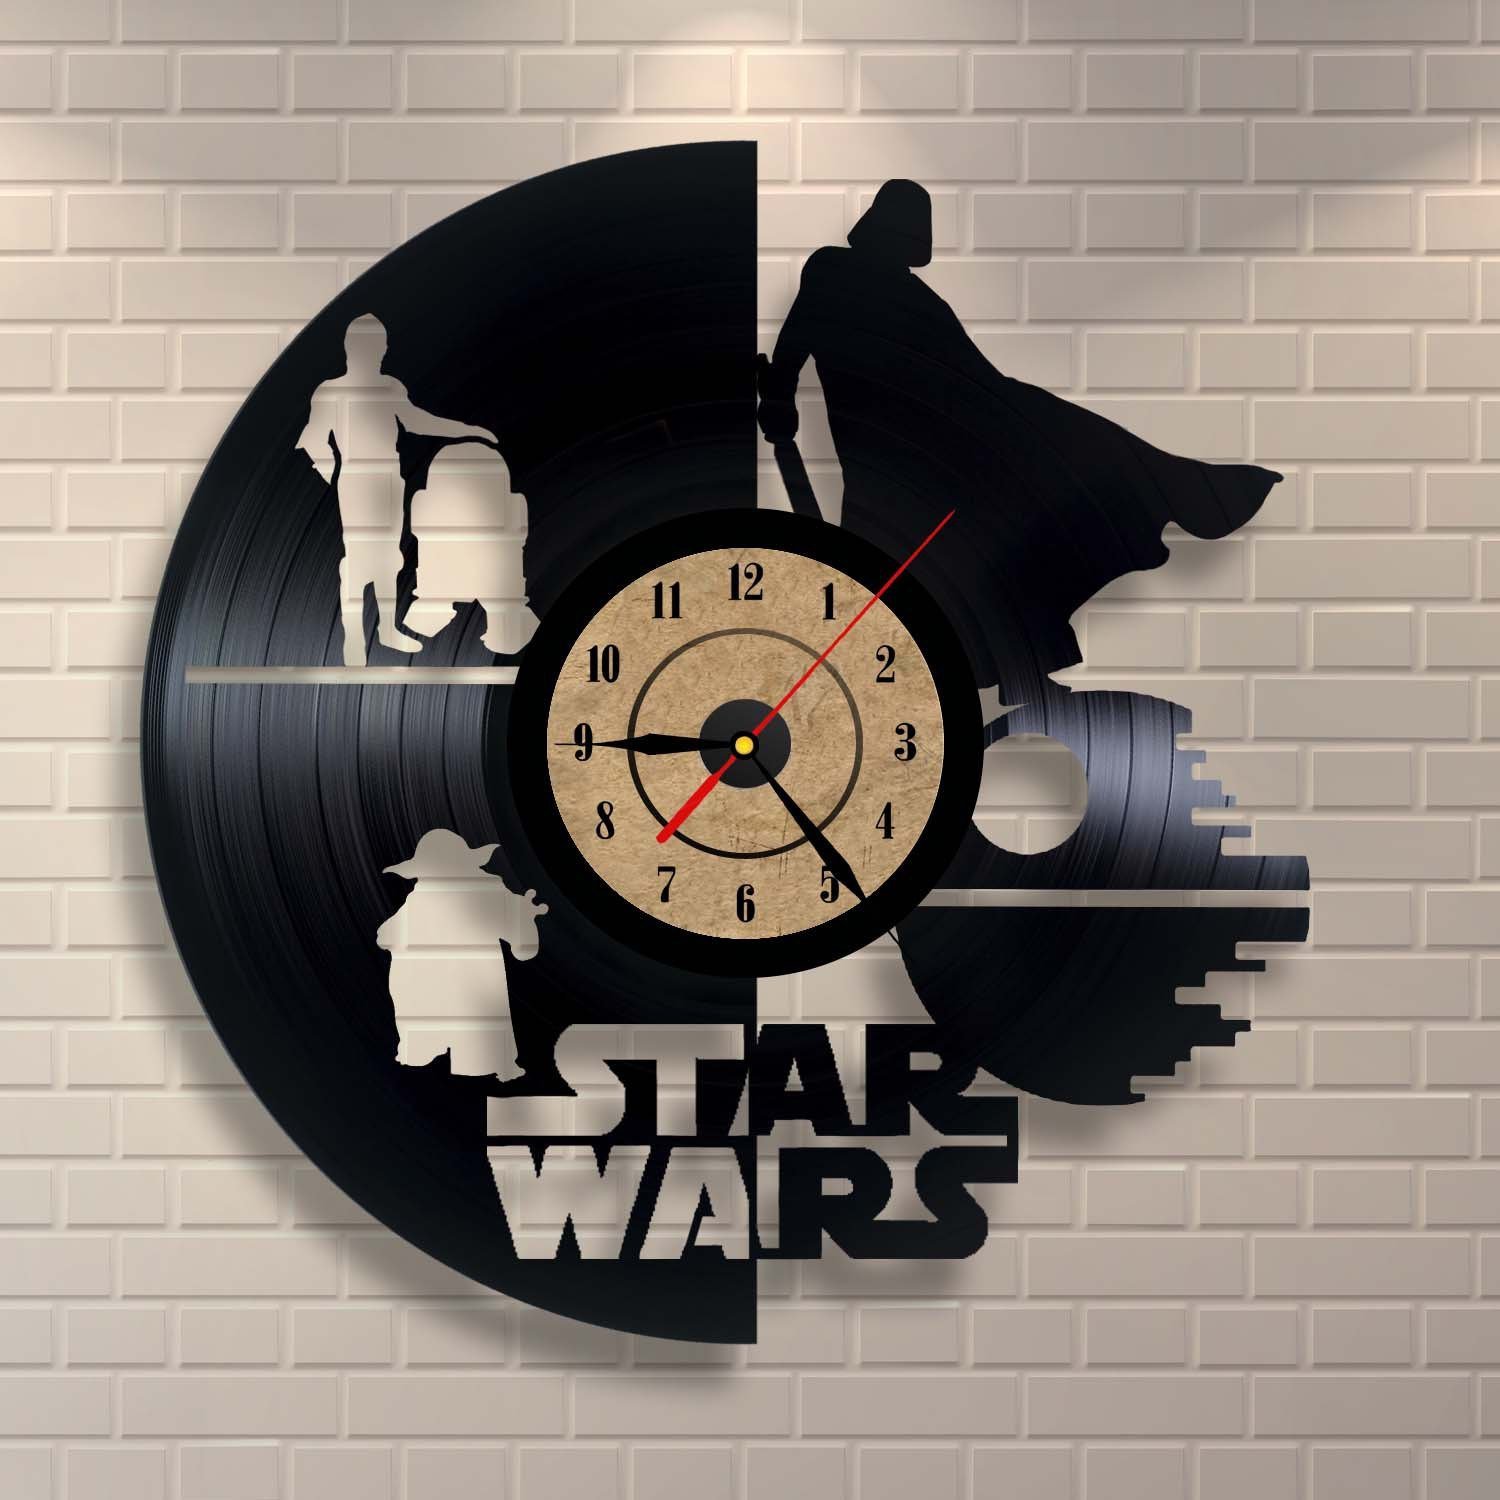 Download Vinyl Record Clock Star Wars Wall Decor Free Vector cdr ...